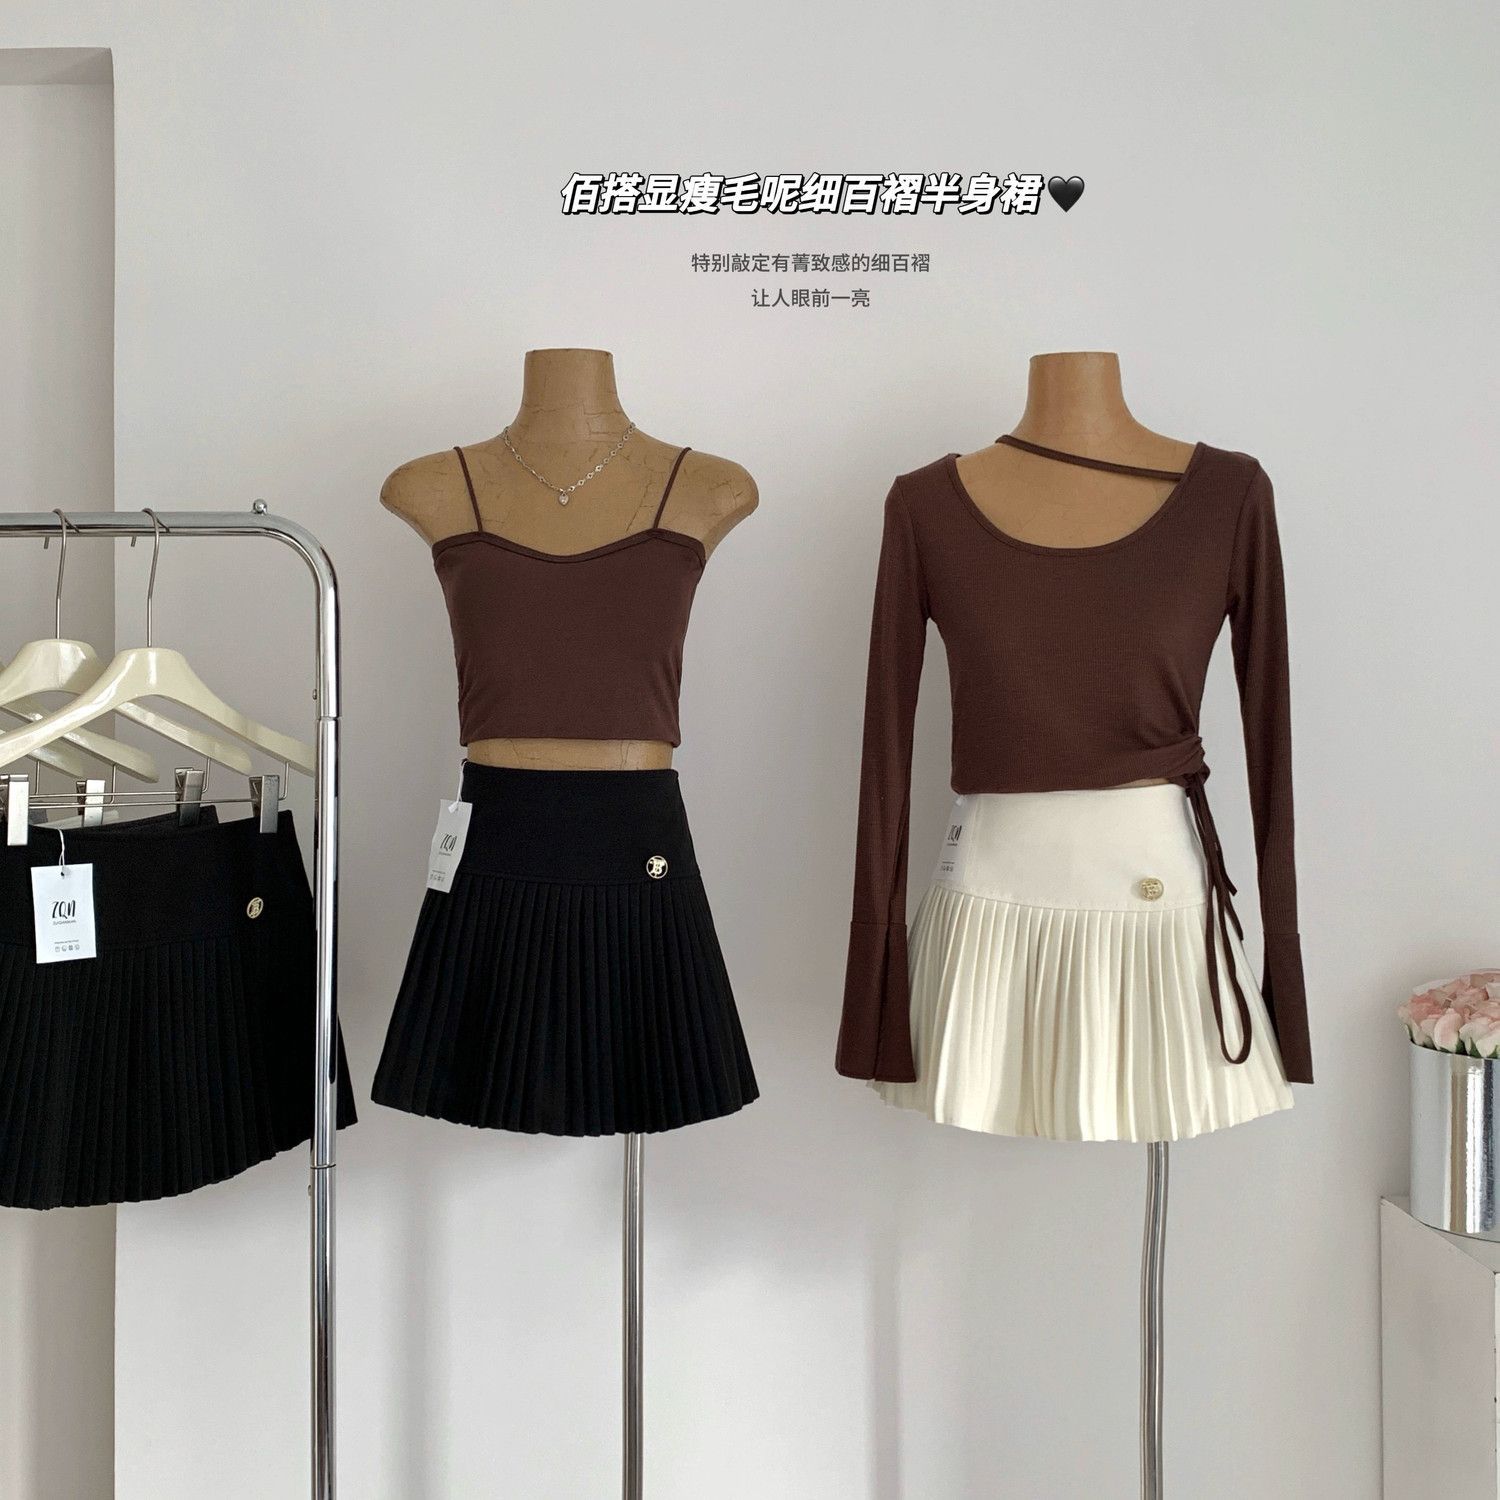 Woolen skirt women's autumn and winter small fragrance style high-end a-line pleated skirt high-waisted slimming versatile short skirt